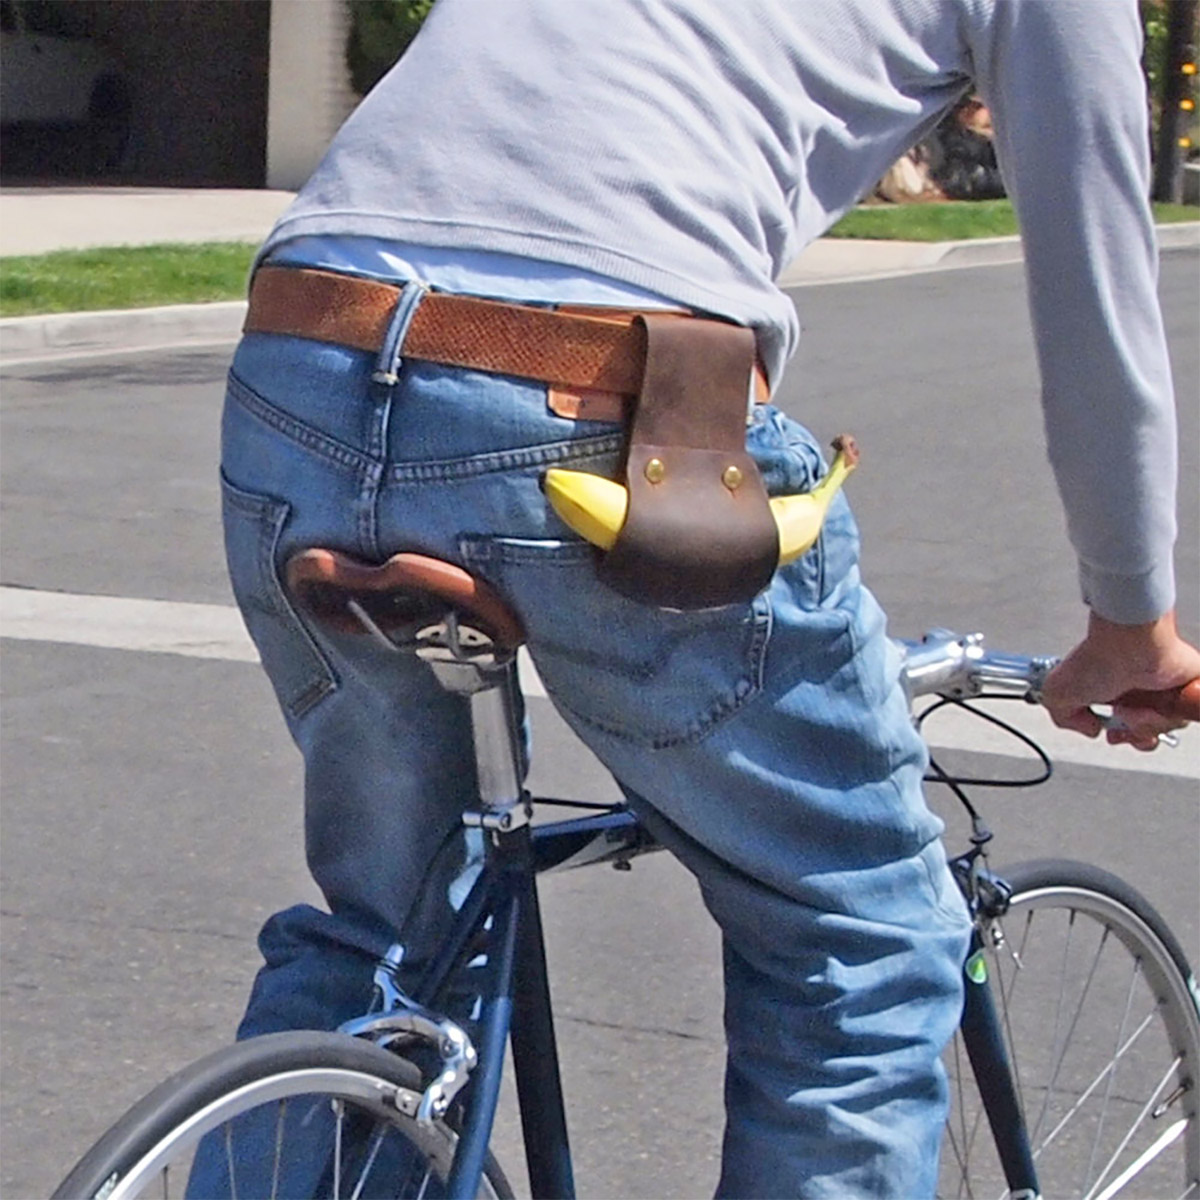 Banana Holder For Your Bicycle - Leather bike banana holster.